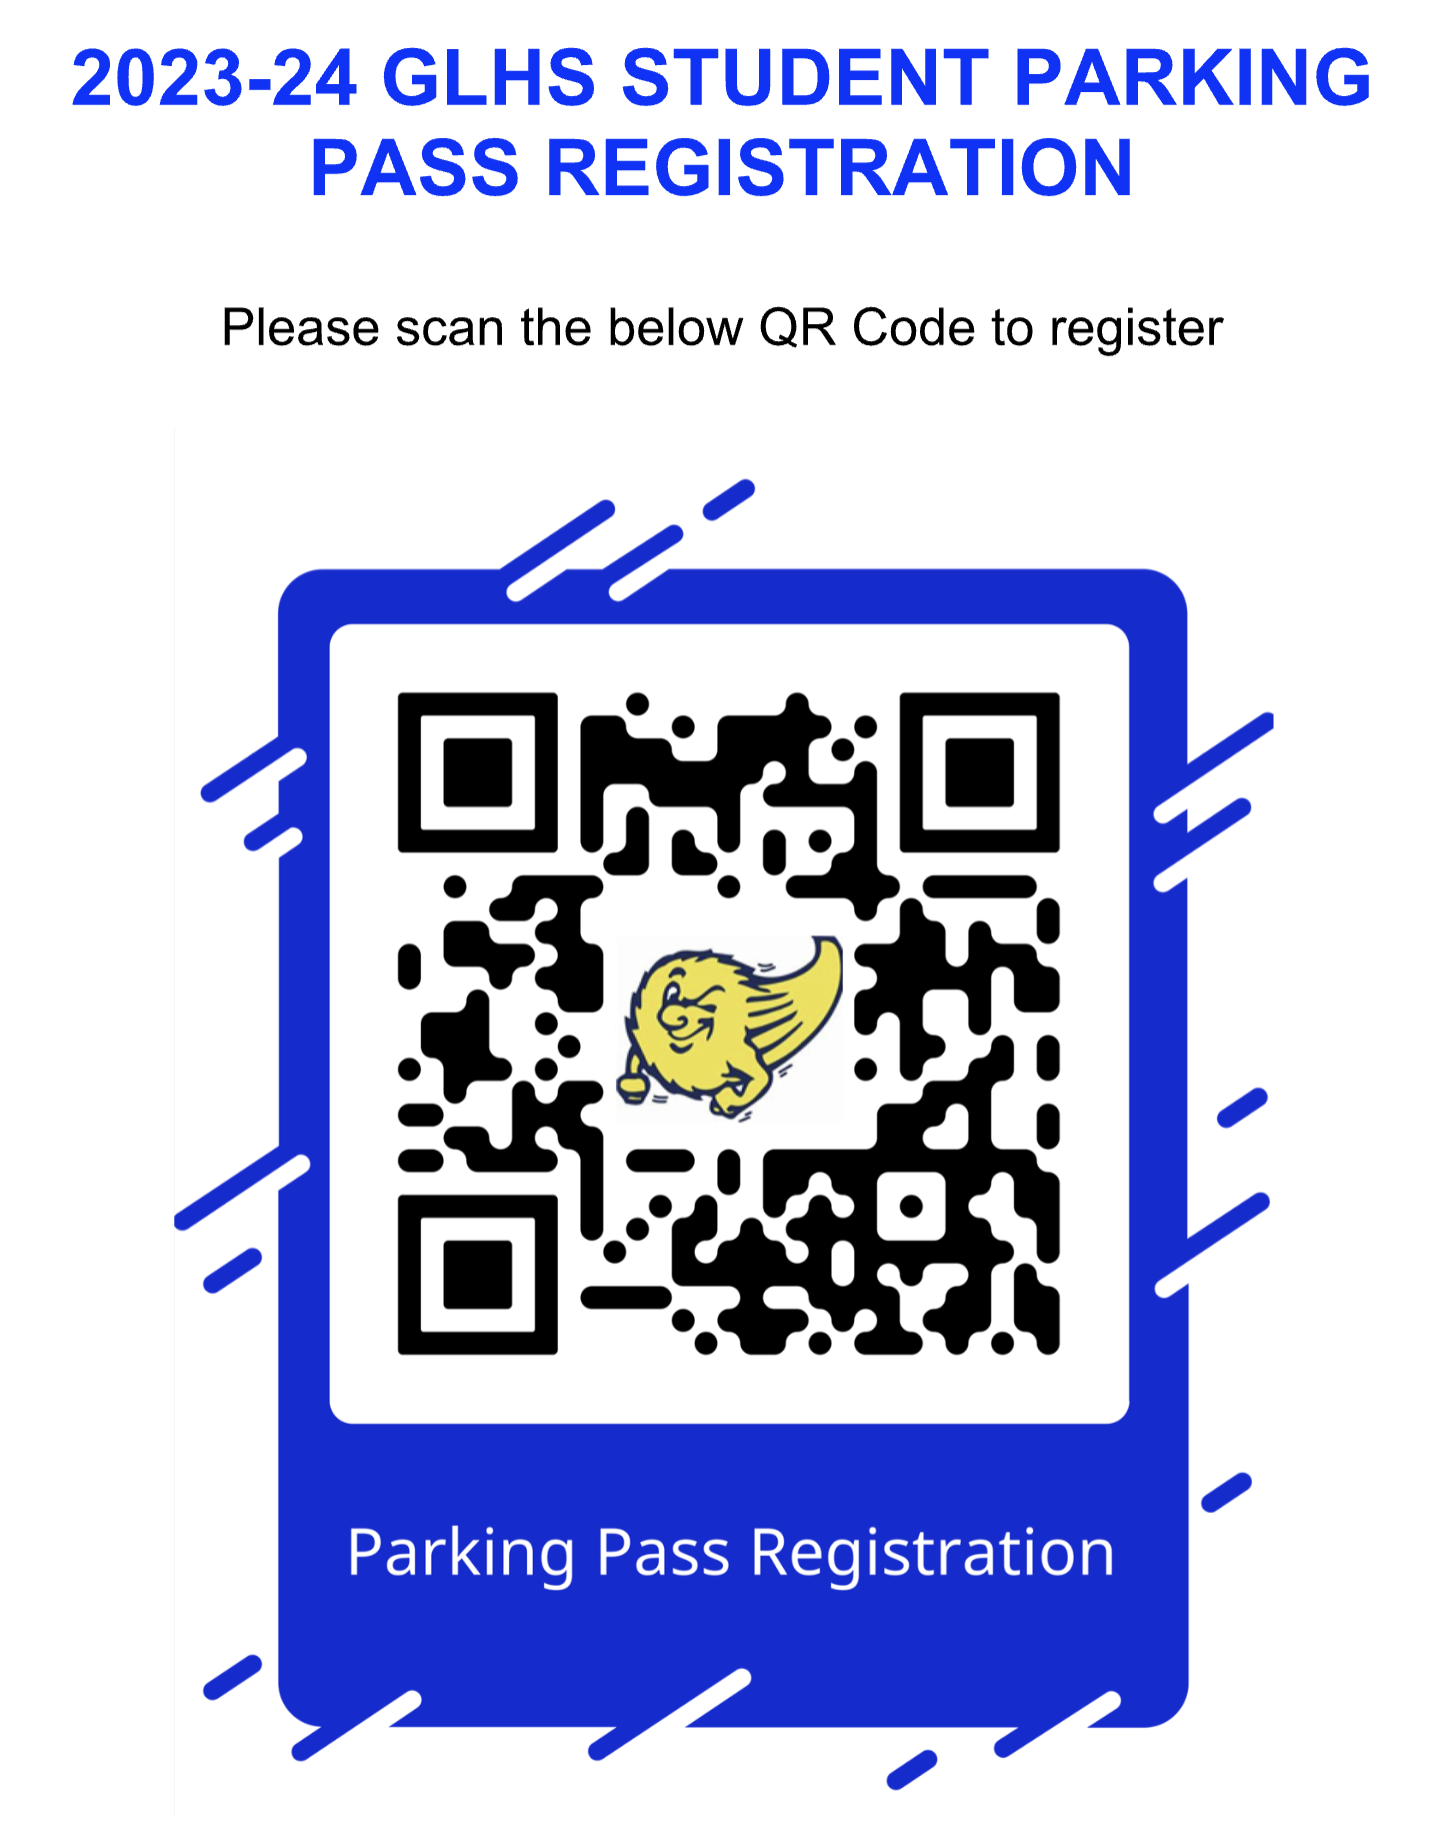 Parking Pass Registration photo